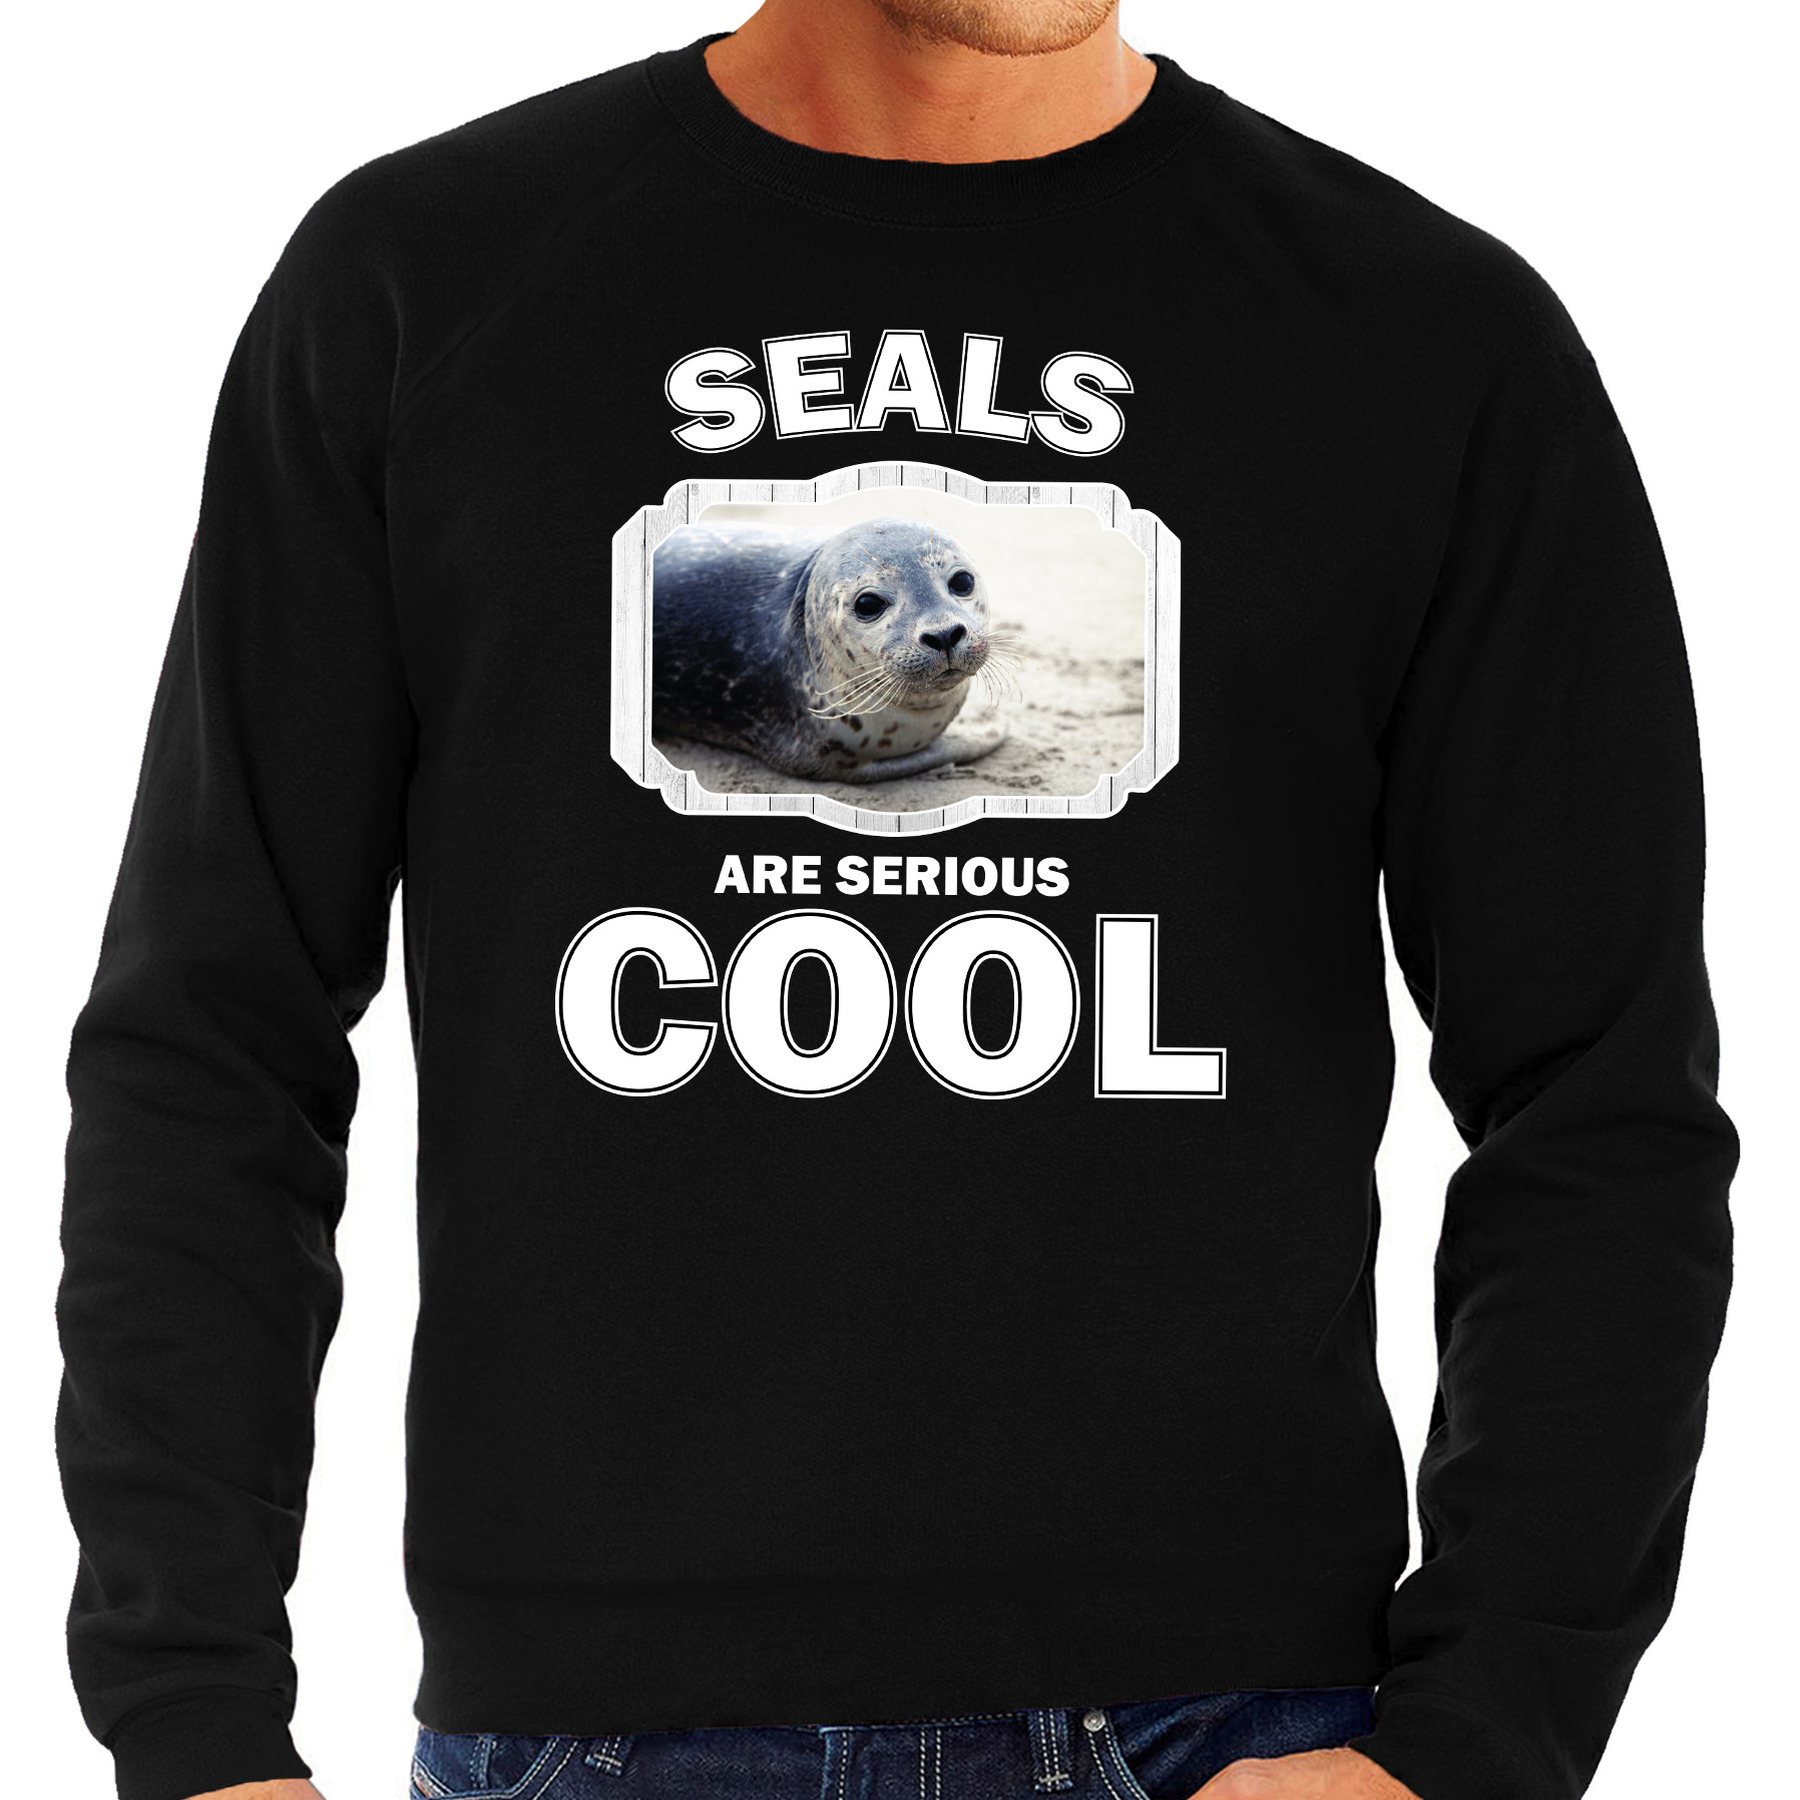 Dieren grijze zeehond sweater zwart heren seals are cool trui